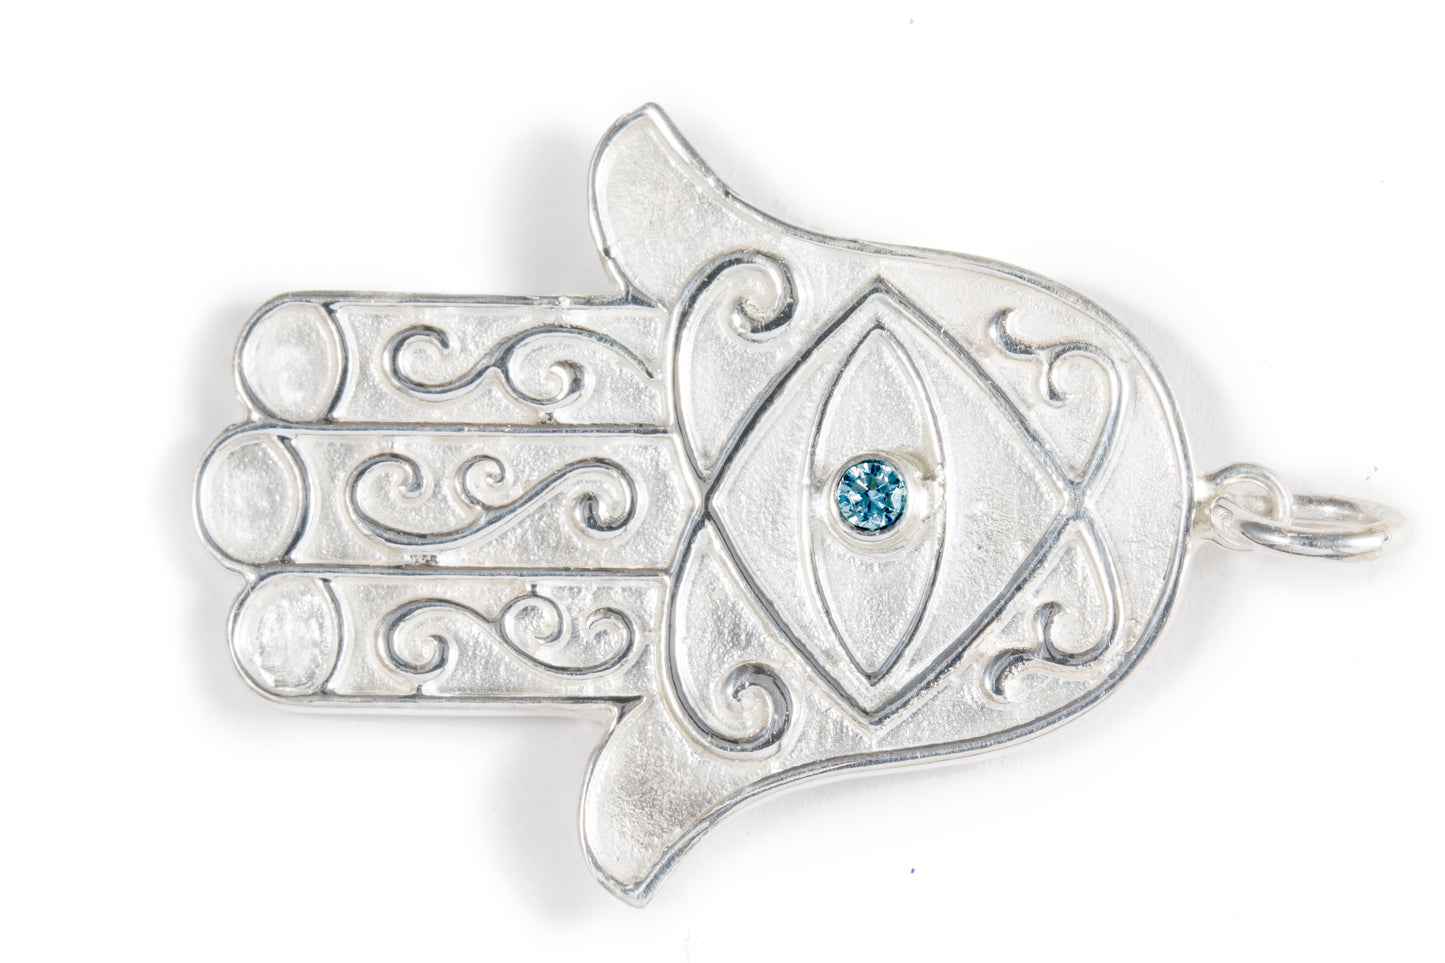 The Hamsa Hand Pendant with Birthstone